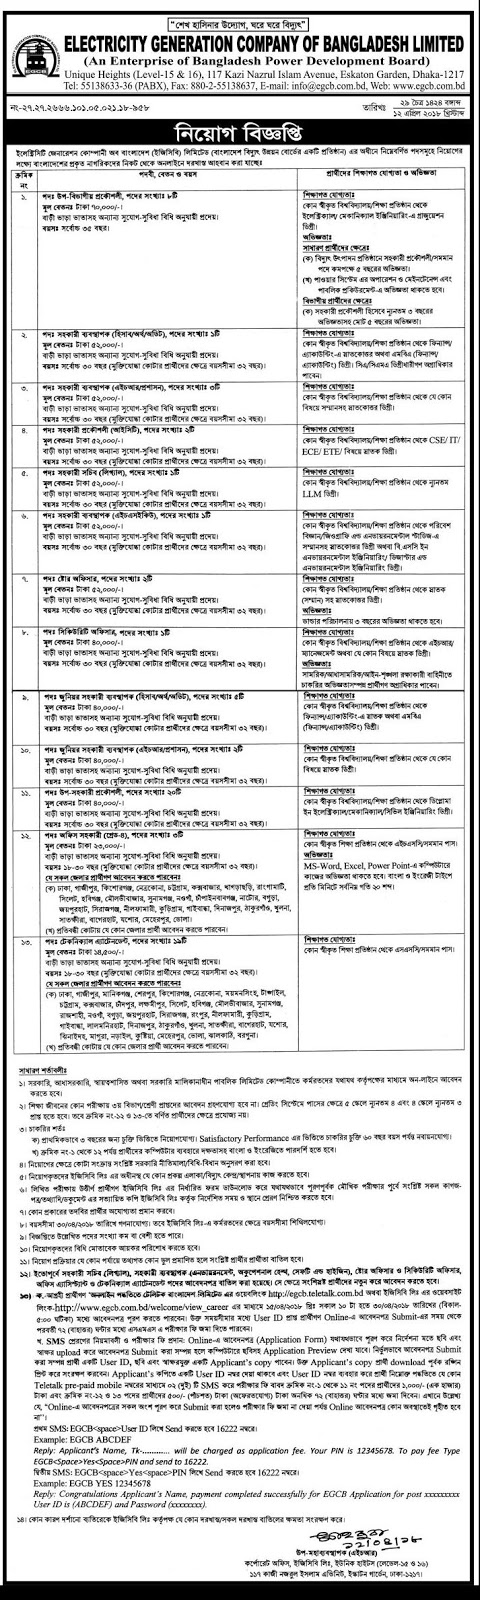 Electricity Generation Company of Bangladesh (EGCB) Job Circular 2018